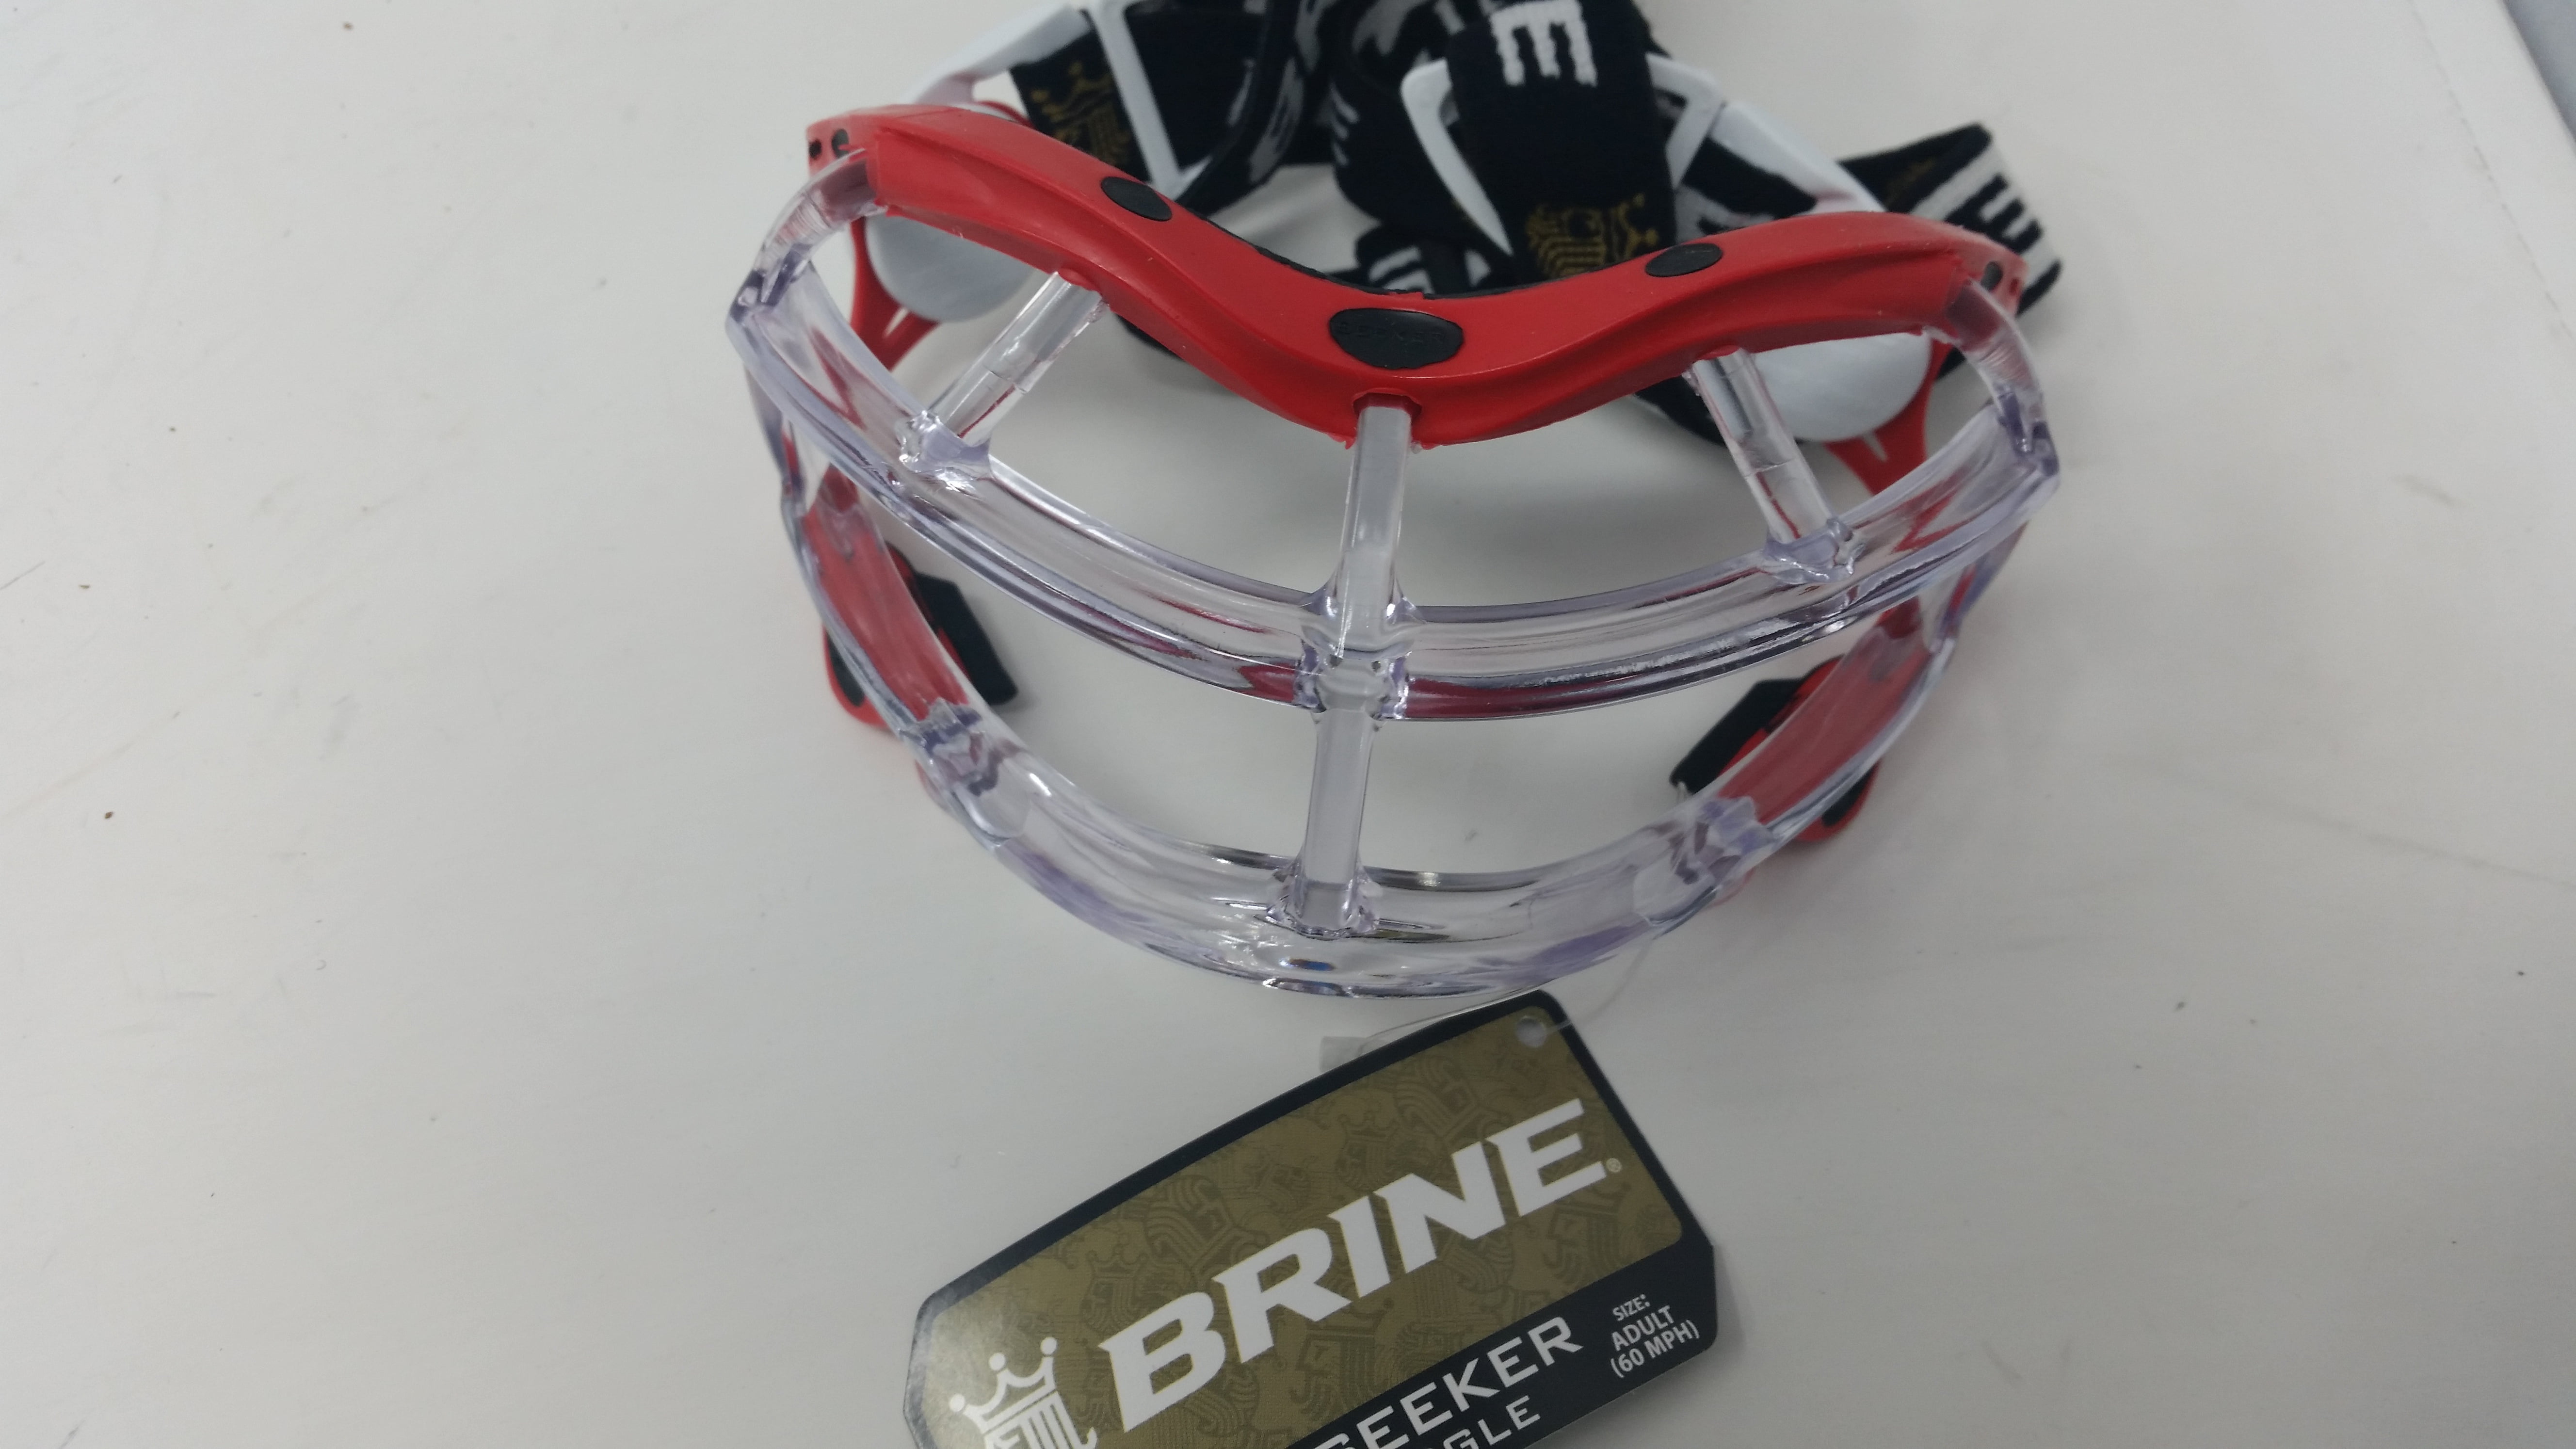 Brine Wgosek3 Adult Lacrosse Seeker Goggle Goggles 60 MPH for sale online 